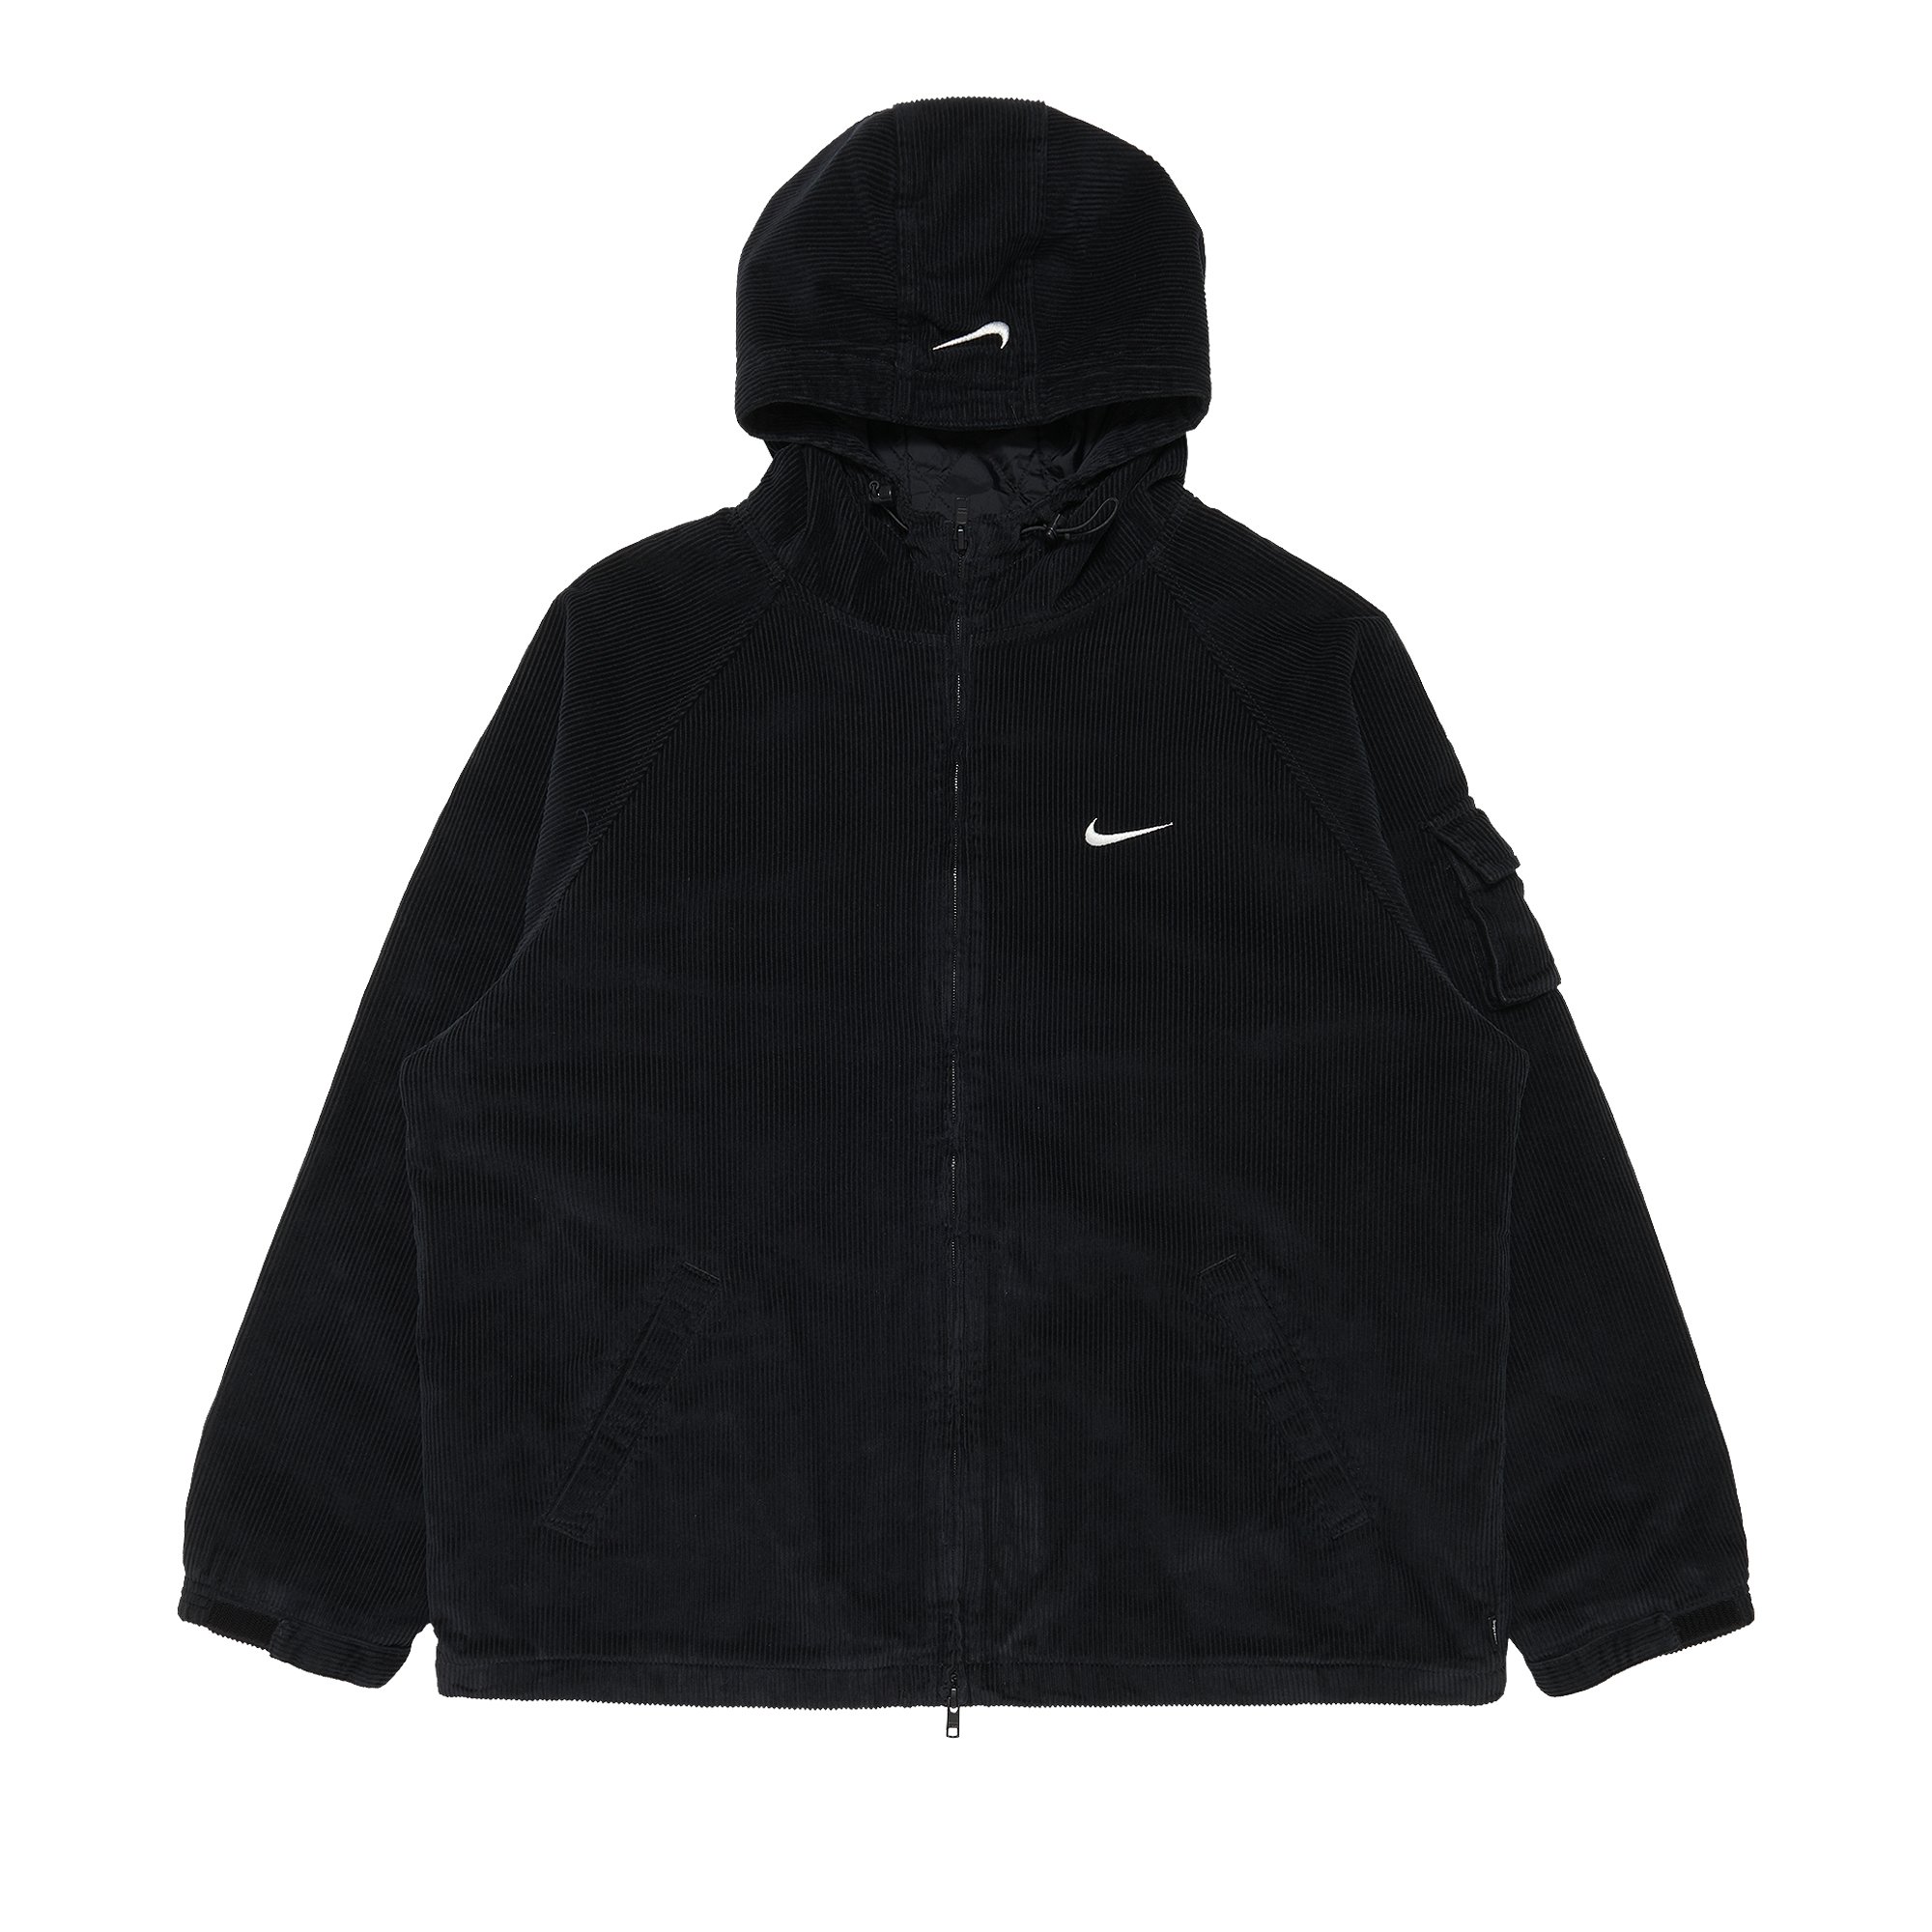 Supreme x Nike Arc Corduroy Hooded Jacket 'Black'